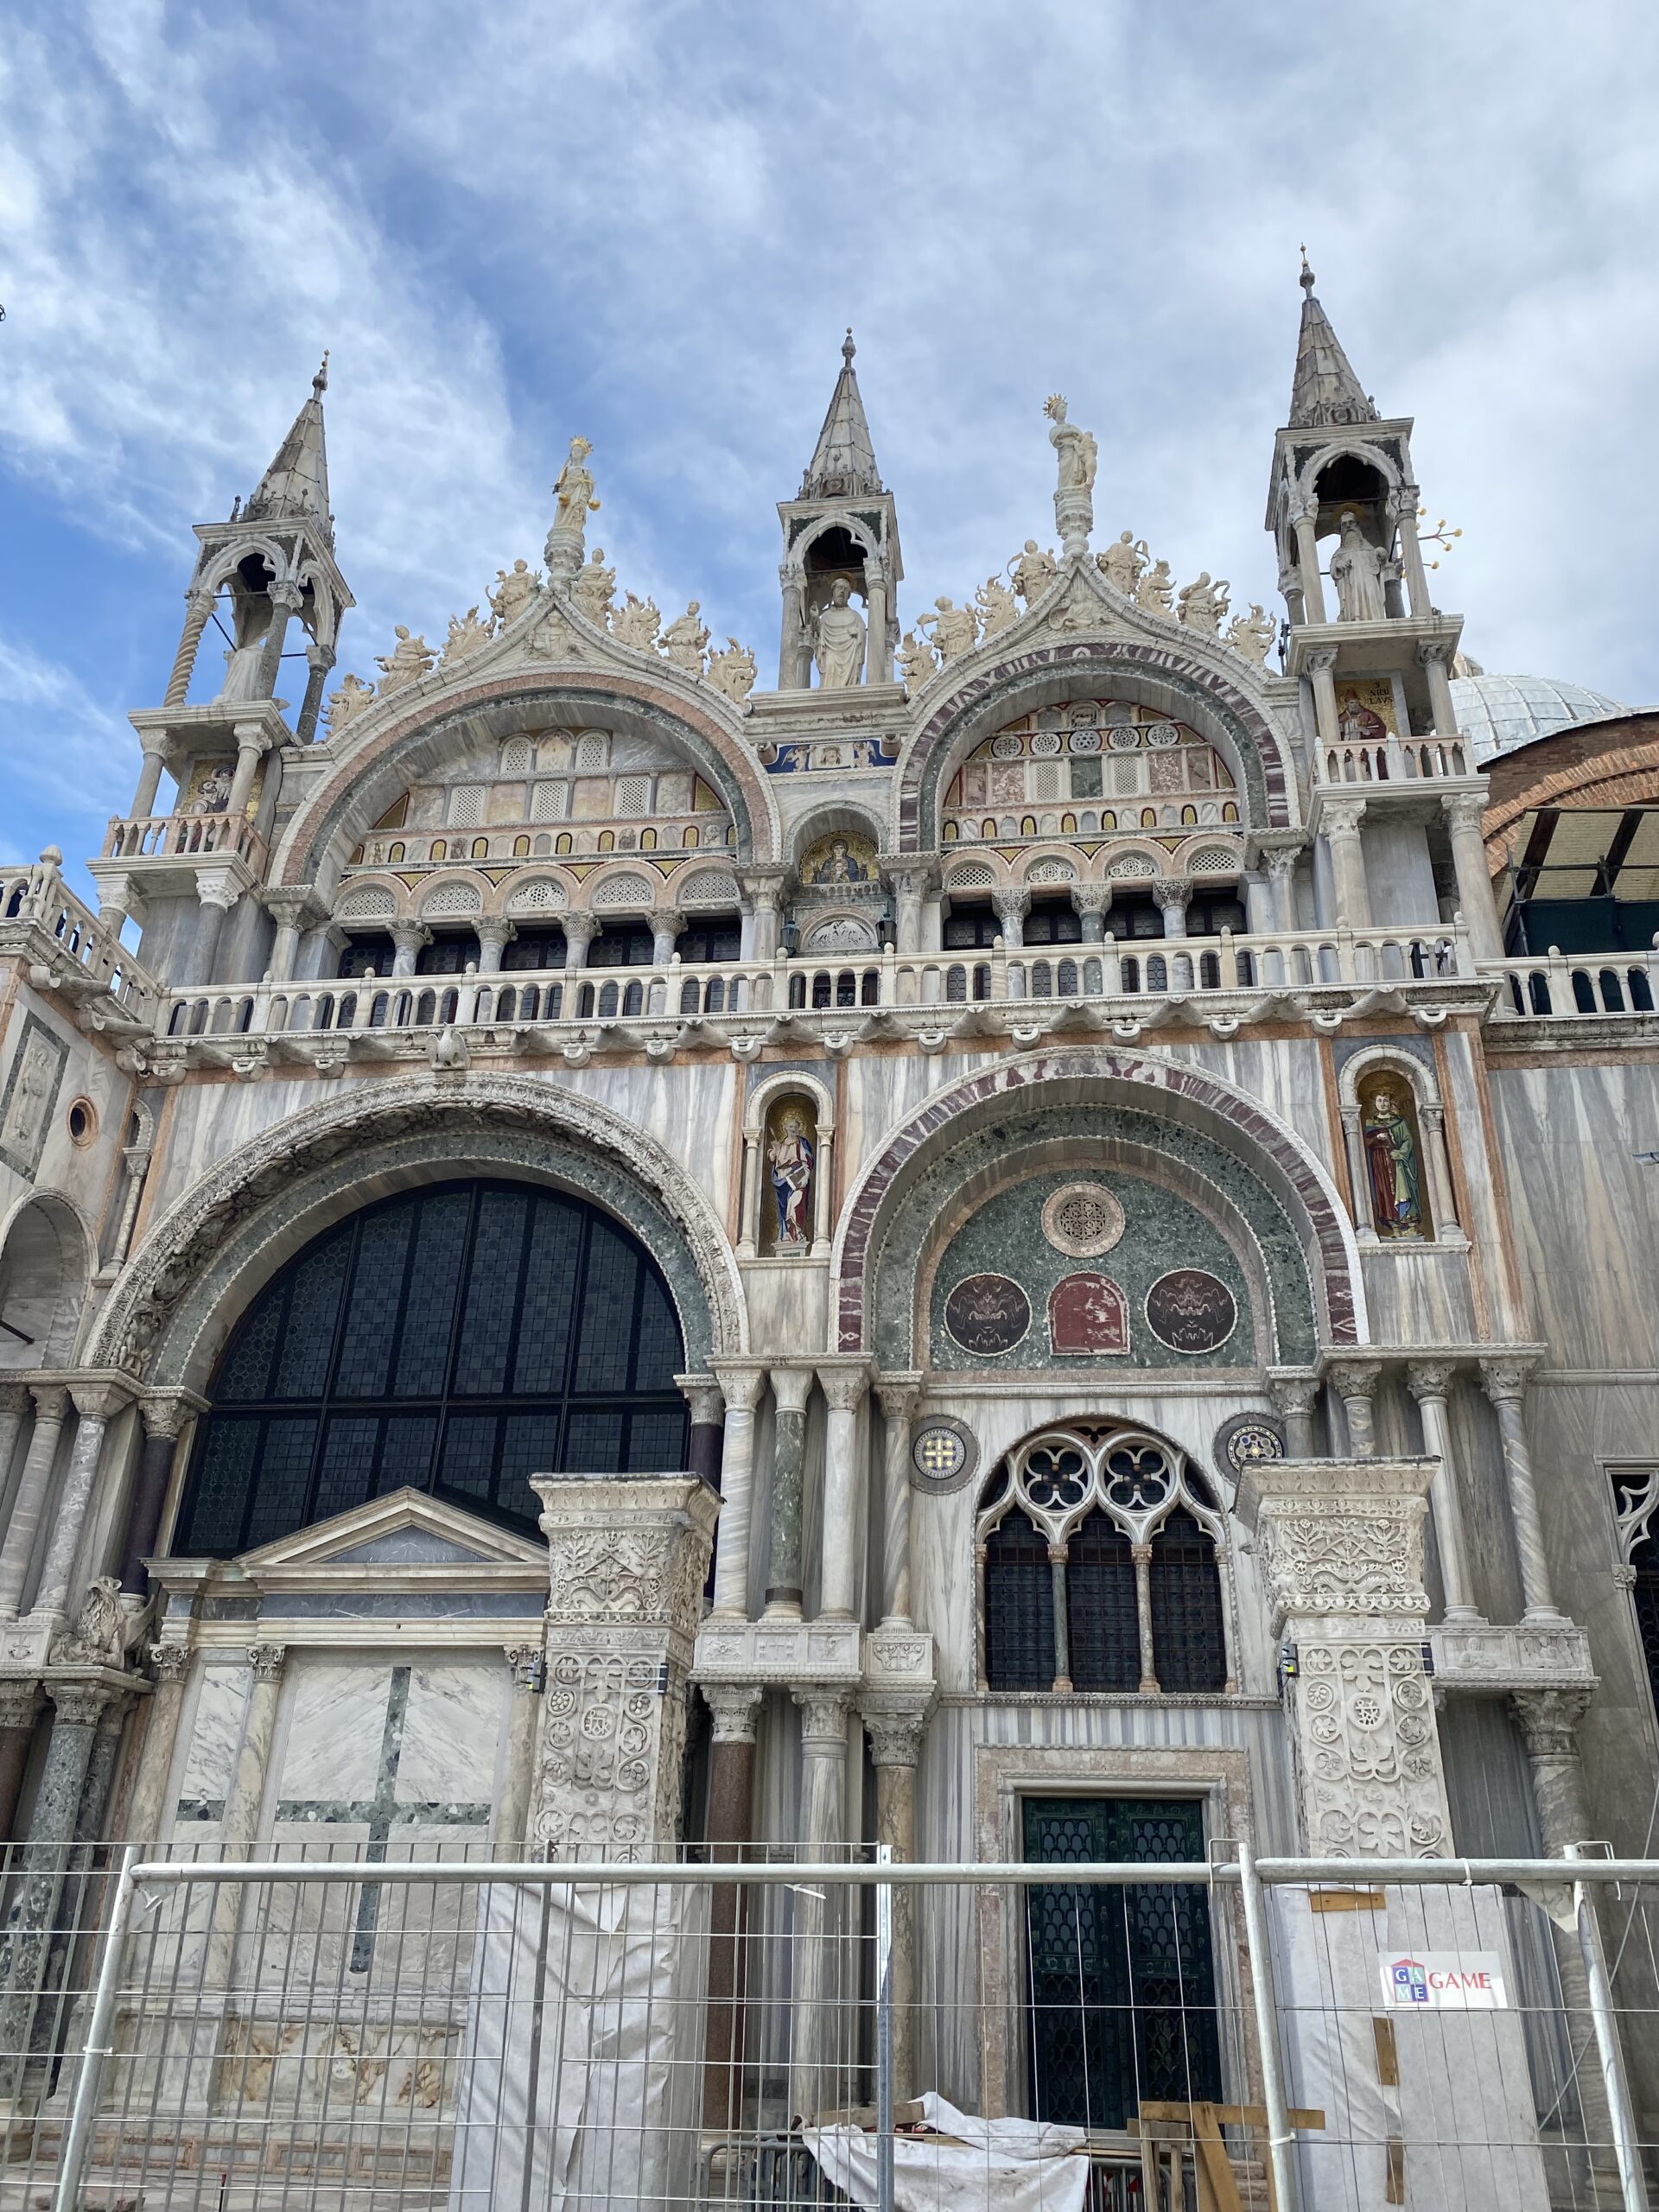 Ornate basilica in Venice Italy